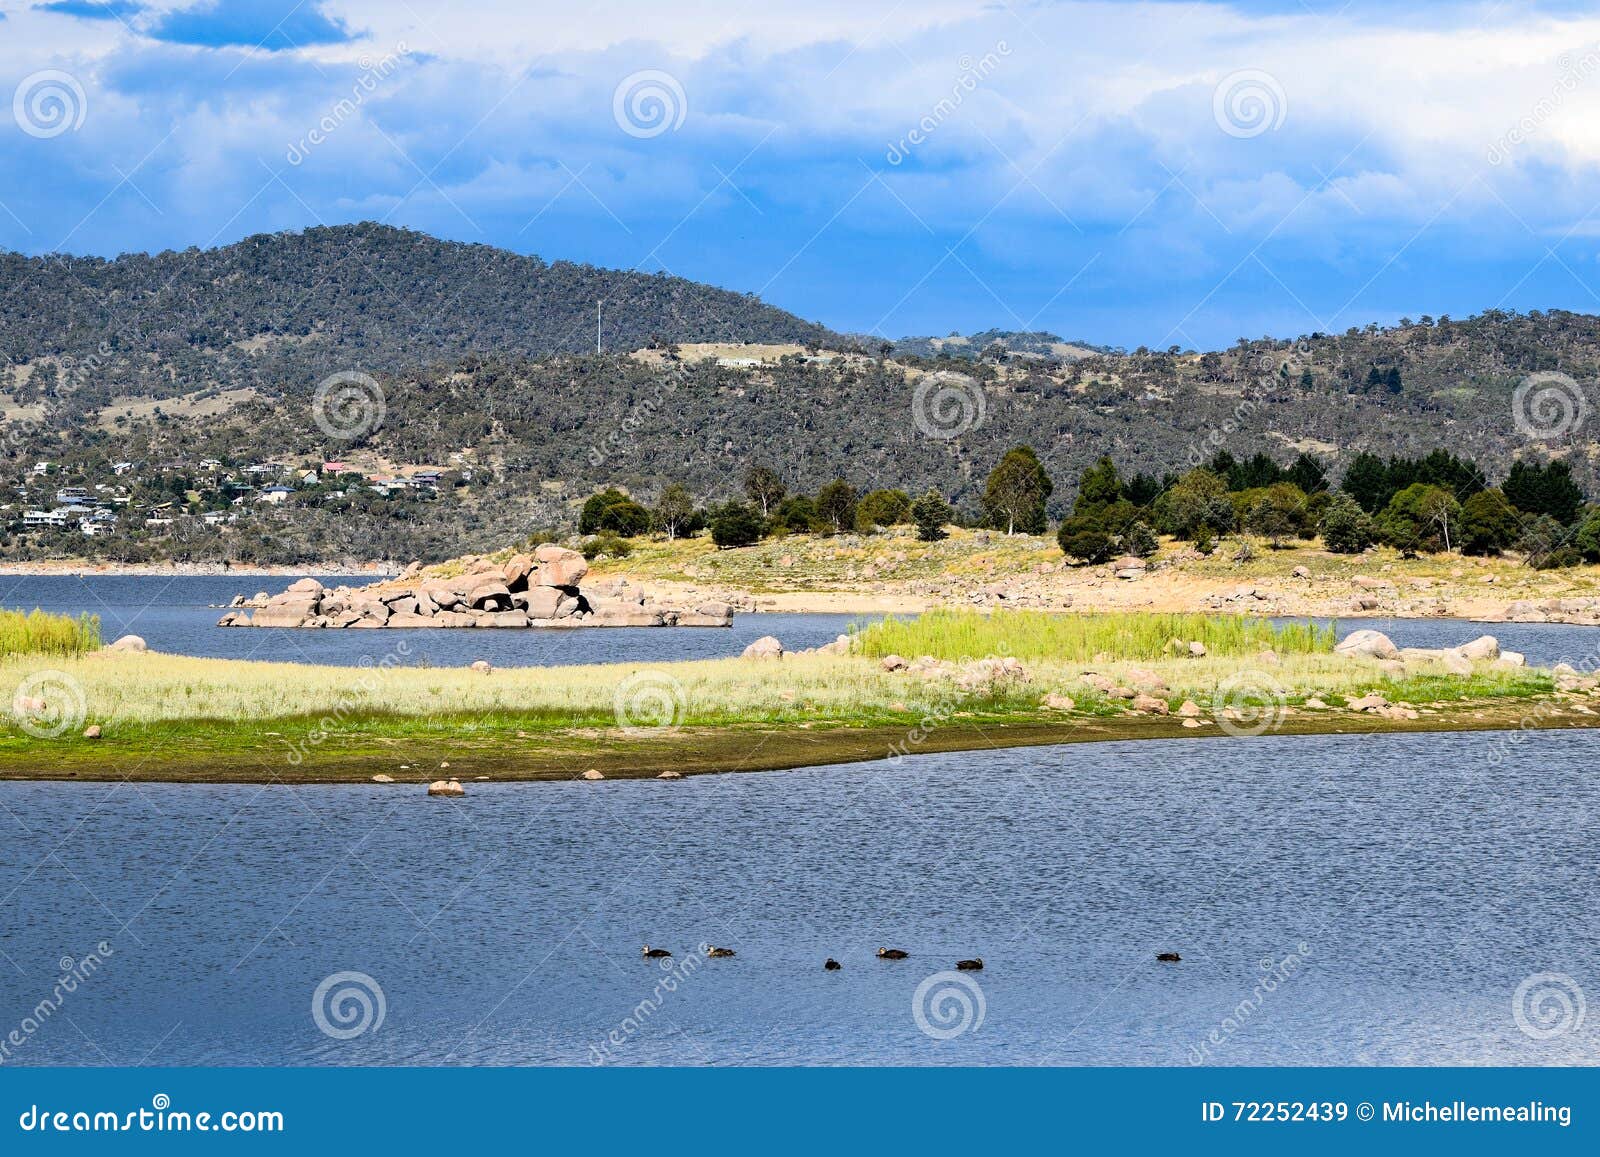 lake jindabyne foreshore in australia. six ducks in foreground.